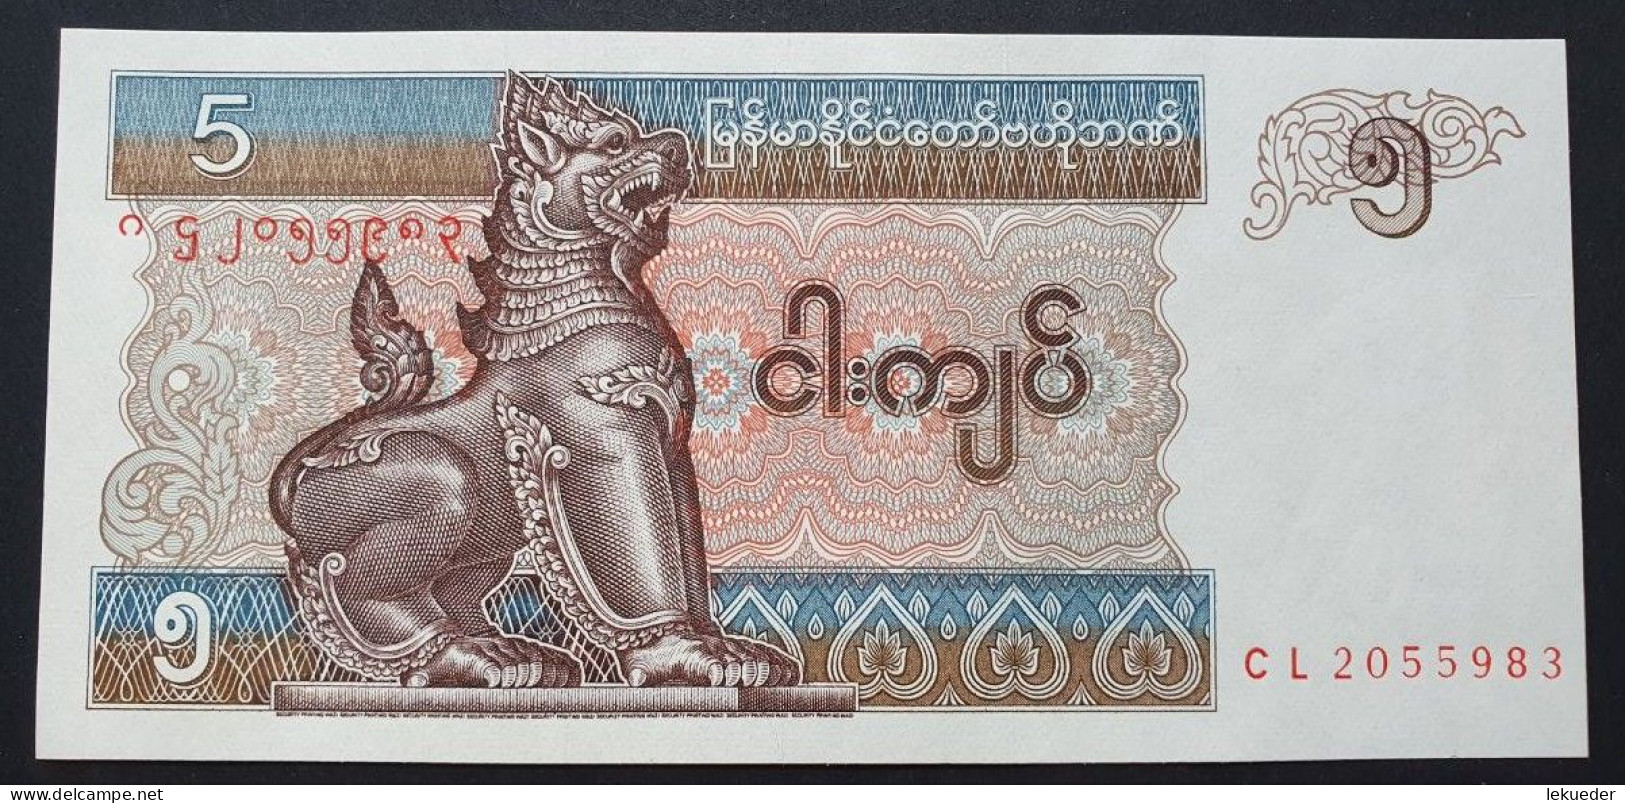 Billete De Banco De MYANMAR (Birmania) - 5 Kyats, 1997  Sin Cursar - Myanmar